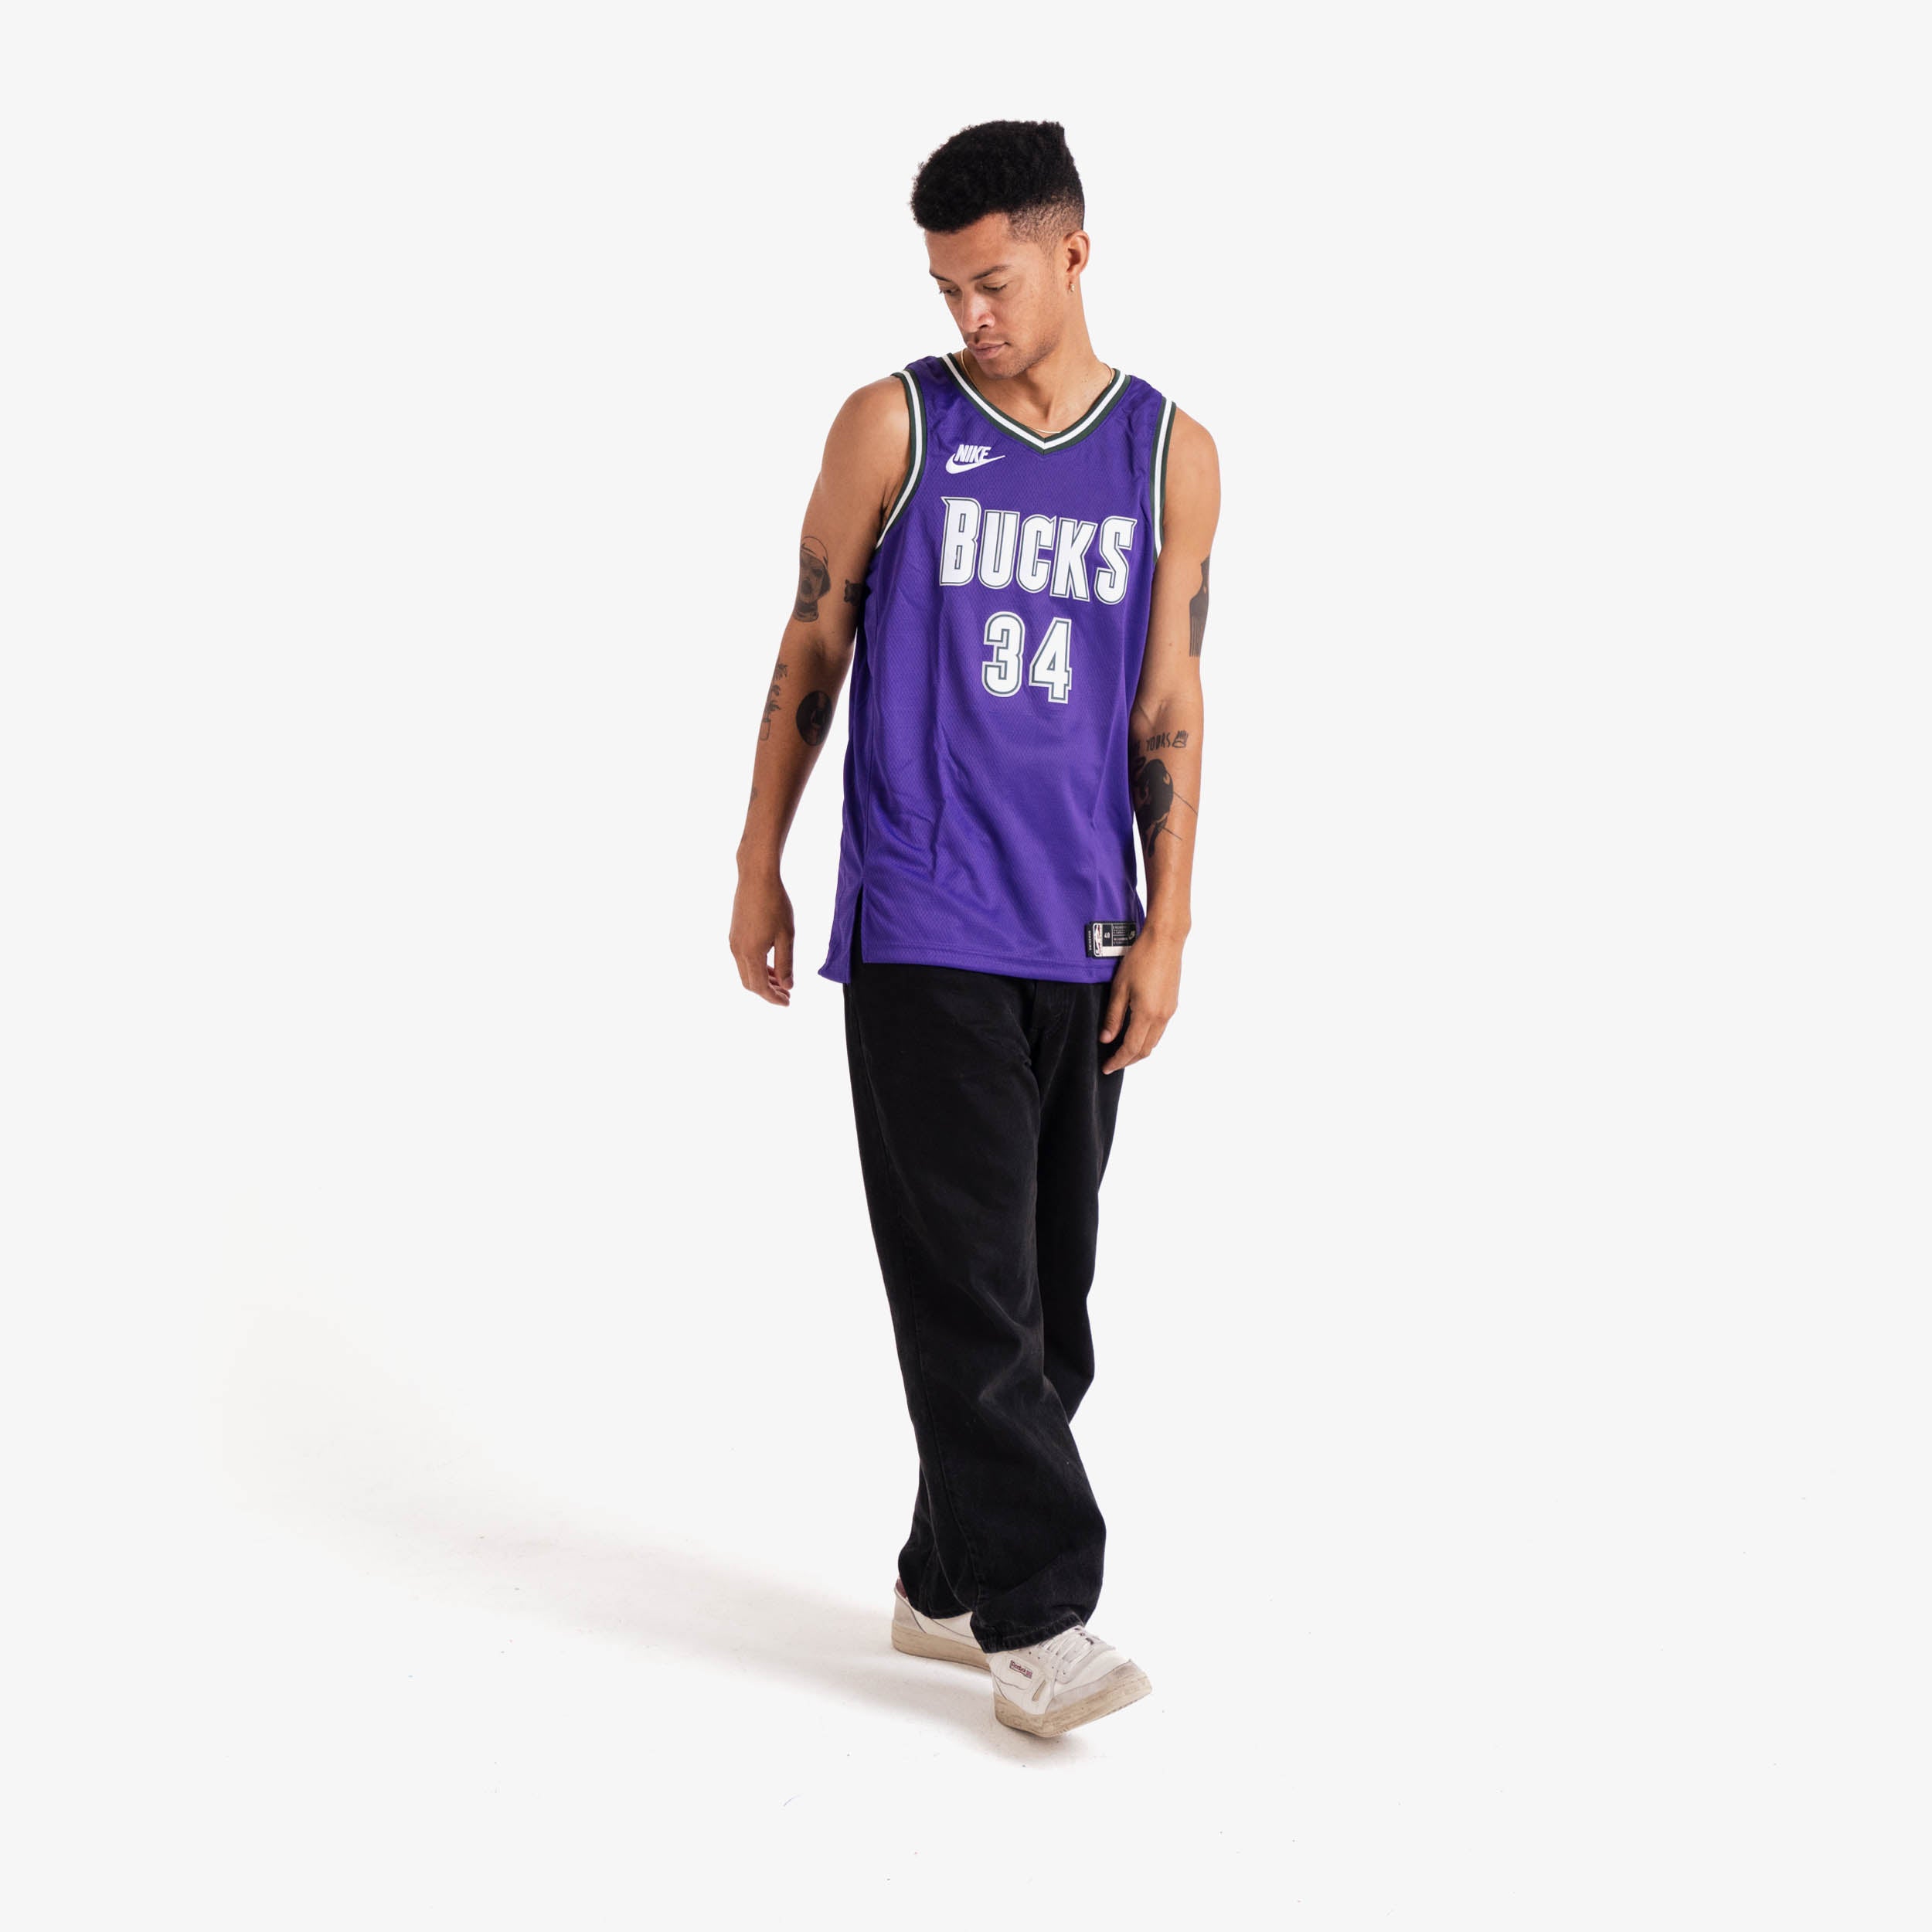 Nike Giannis Antetokounmpo Purple Milwaukee Bucks Swingman Jersey Purple/White